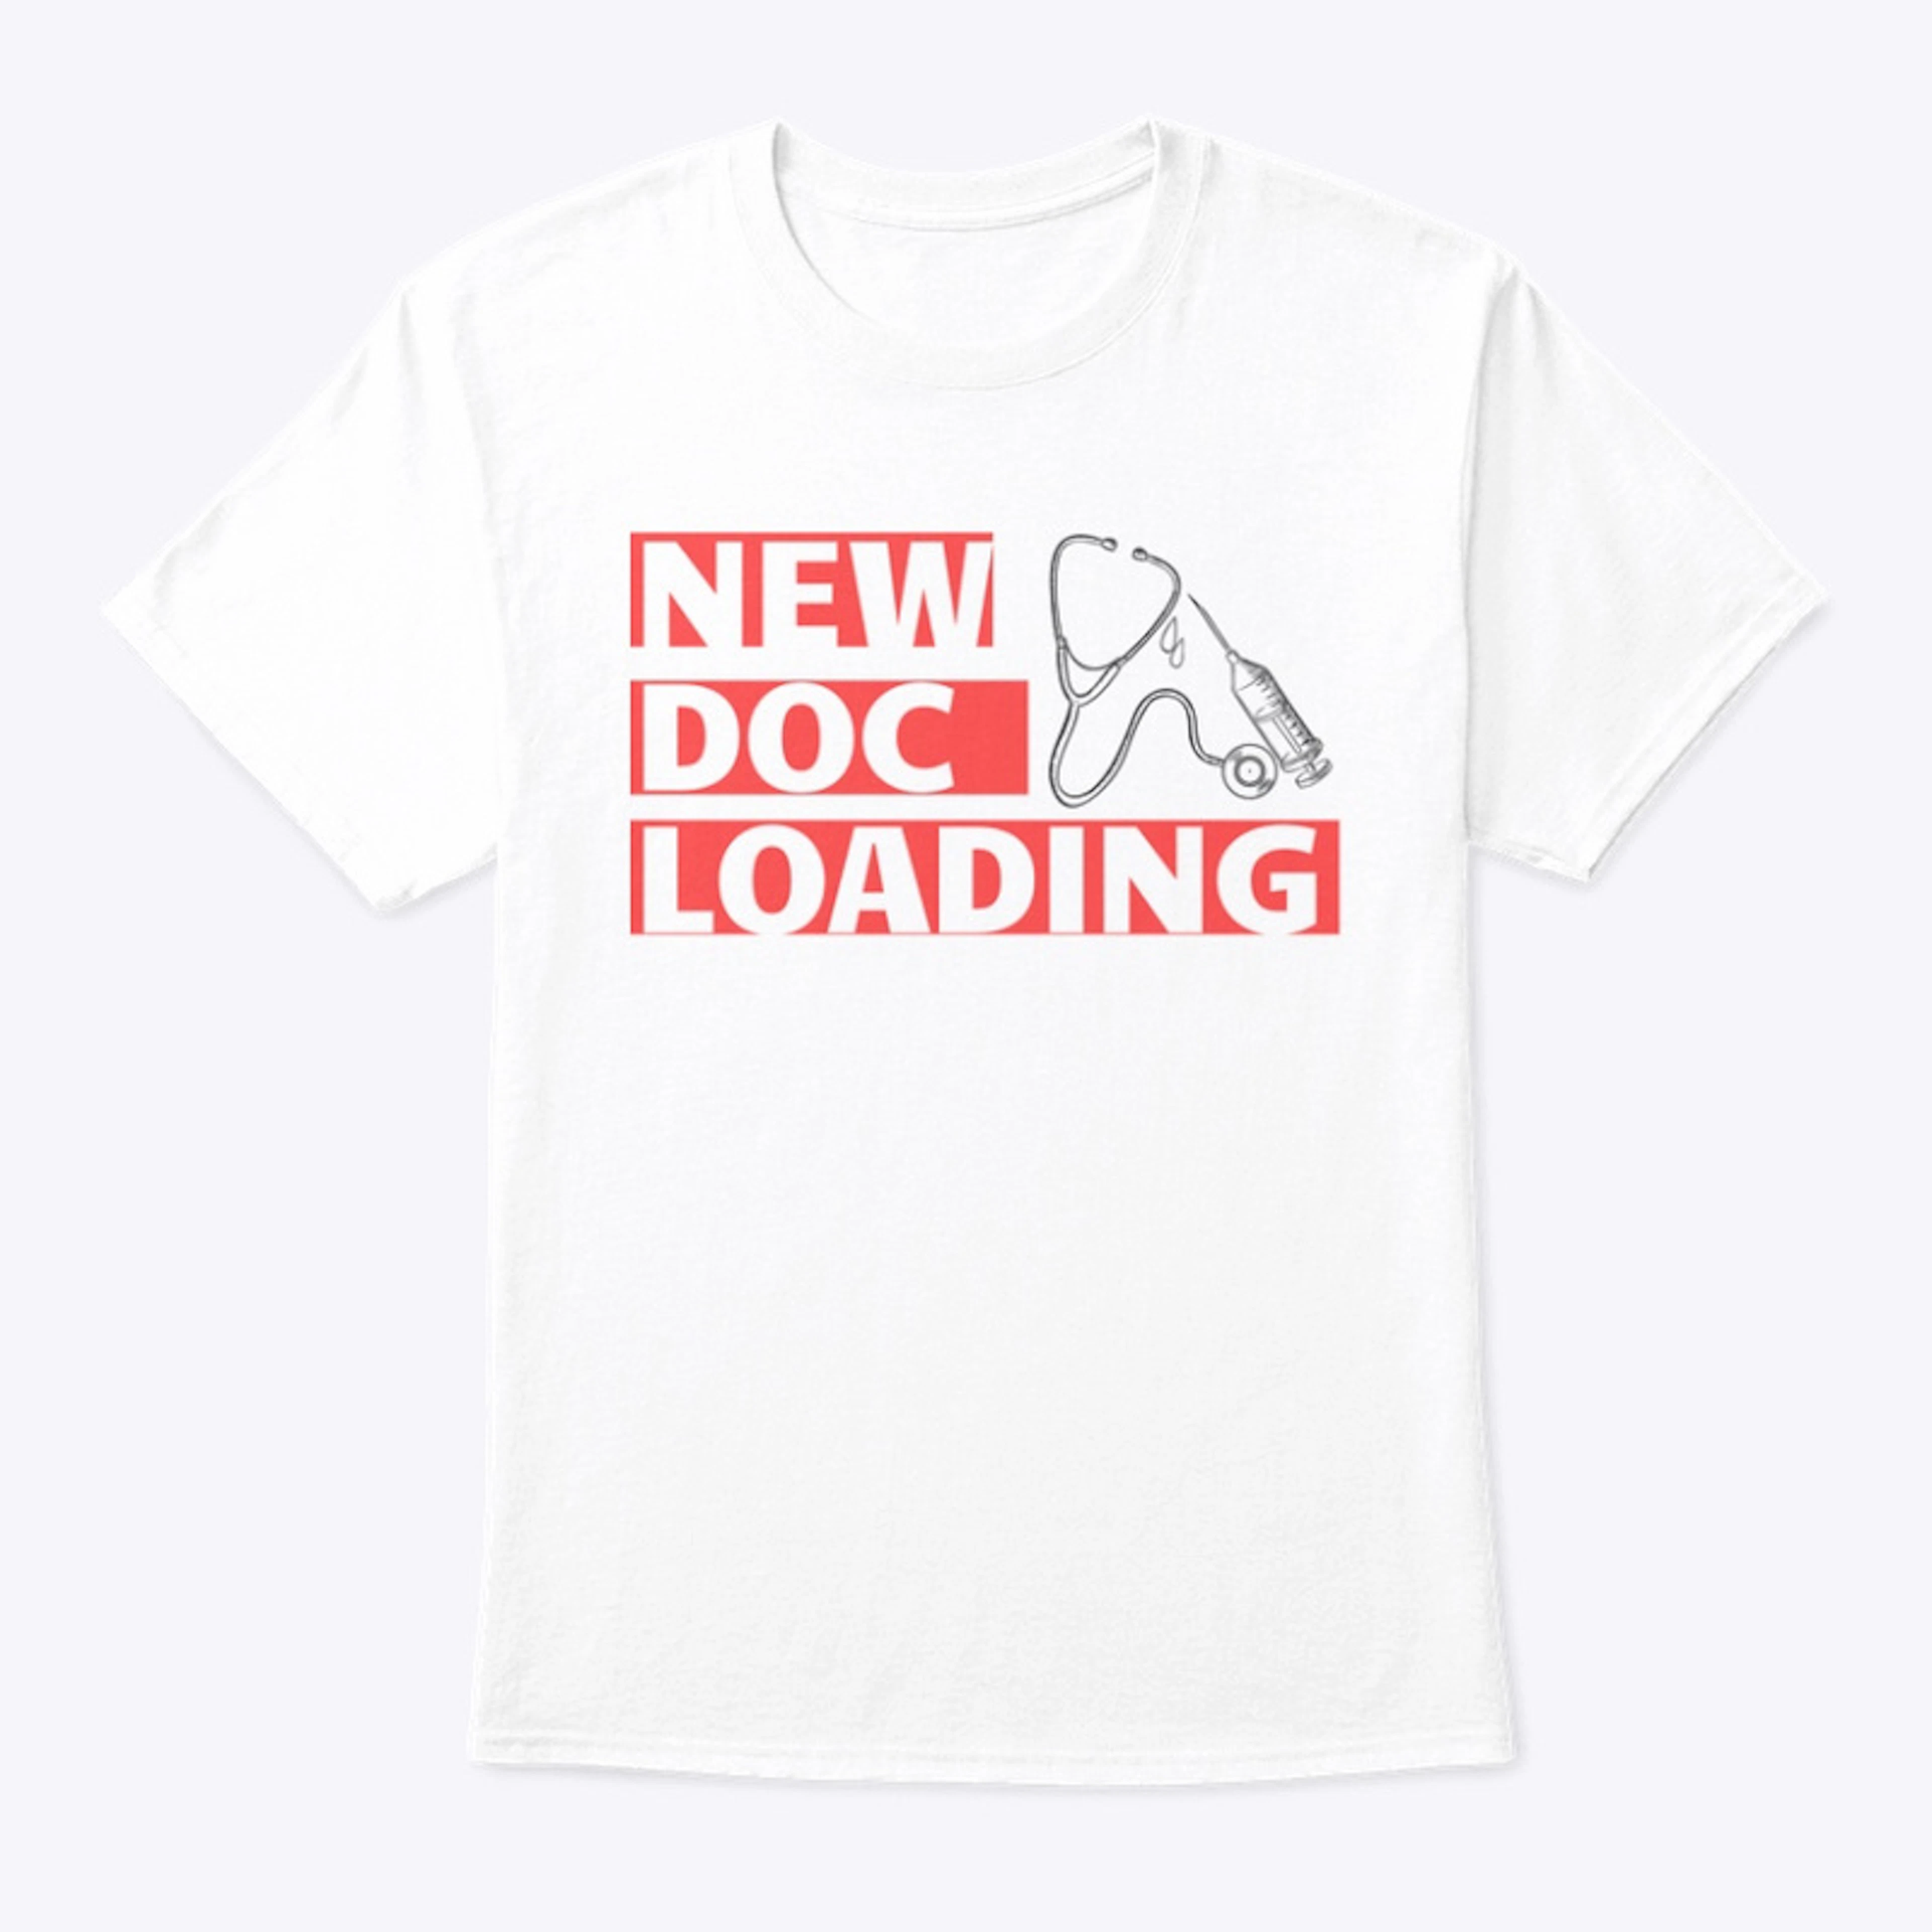 New Doc Loading (black)